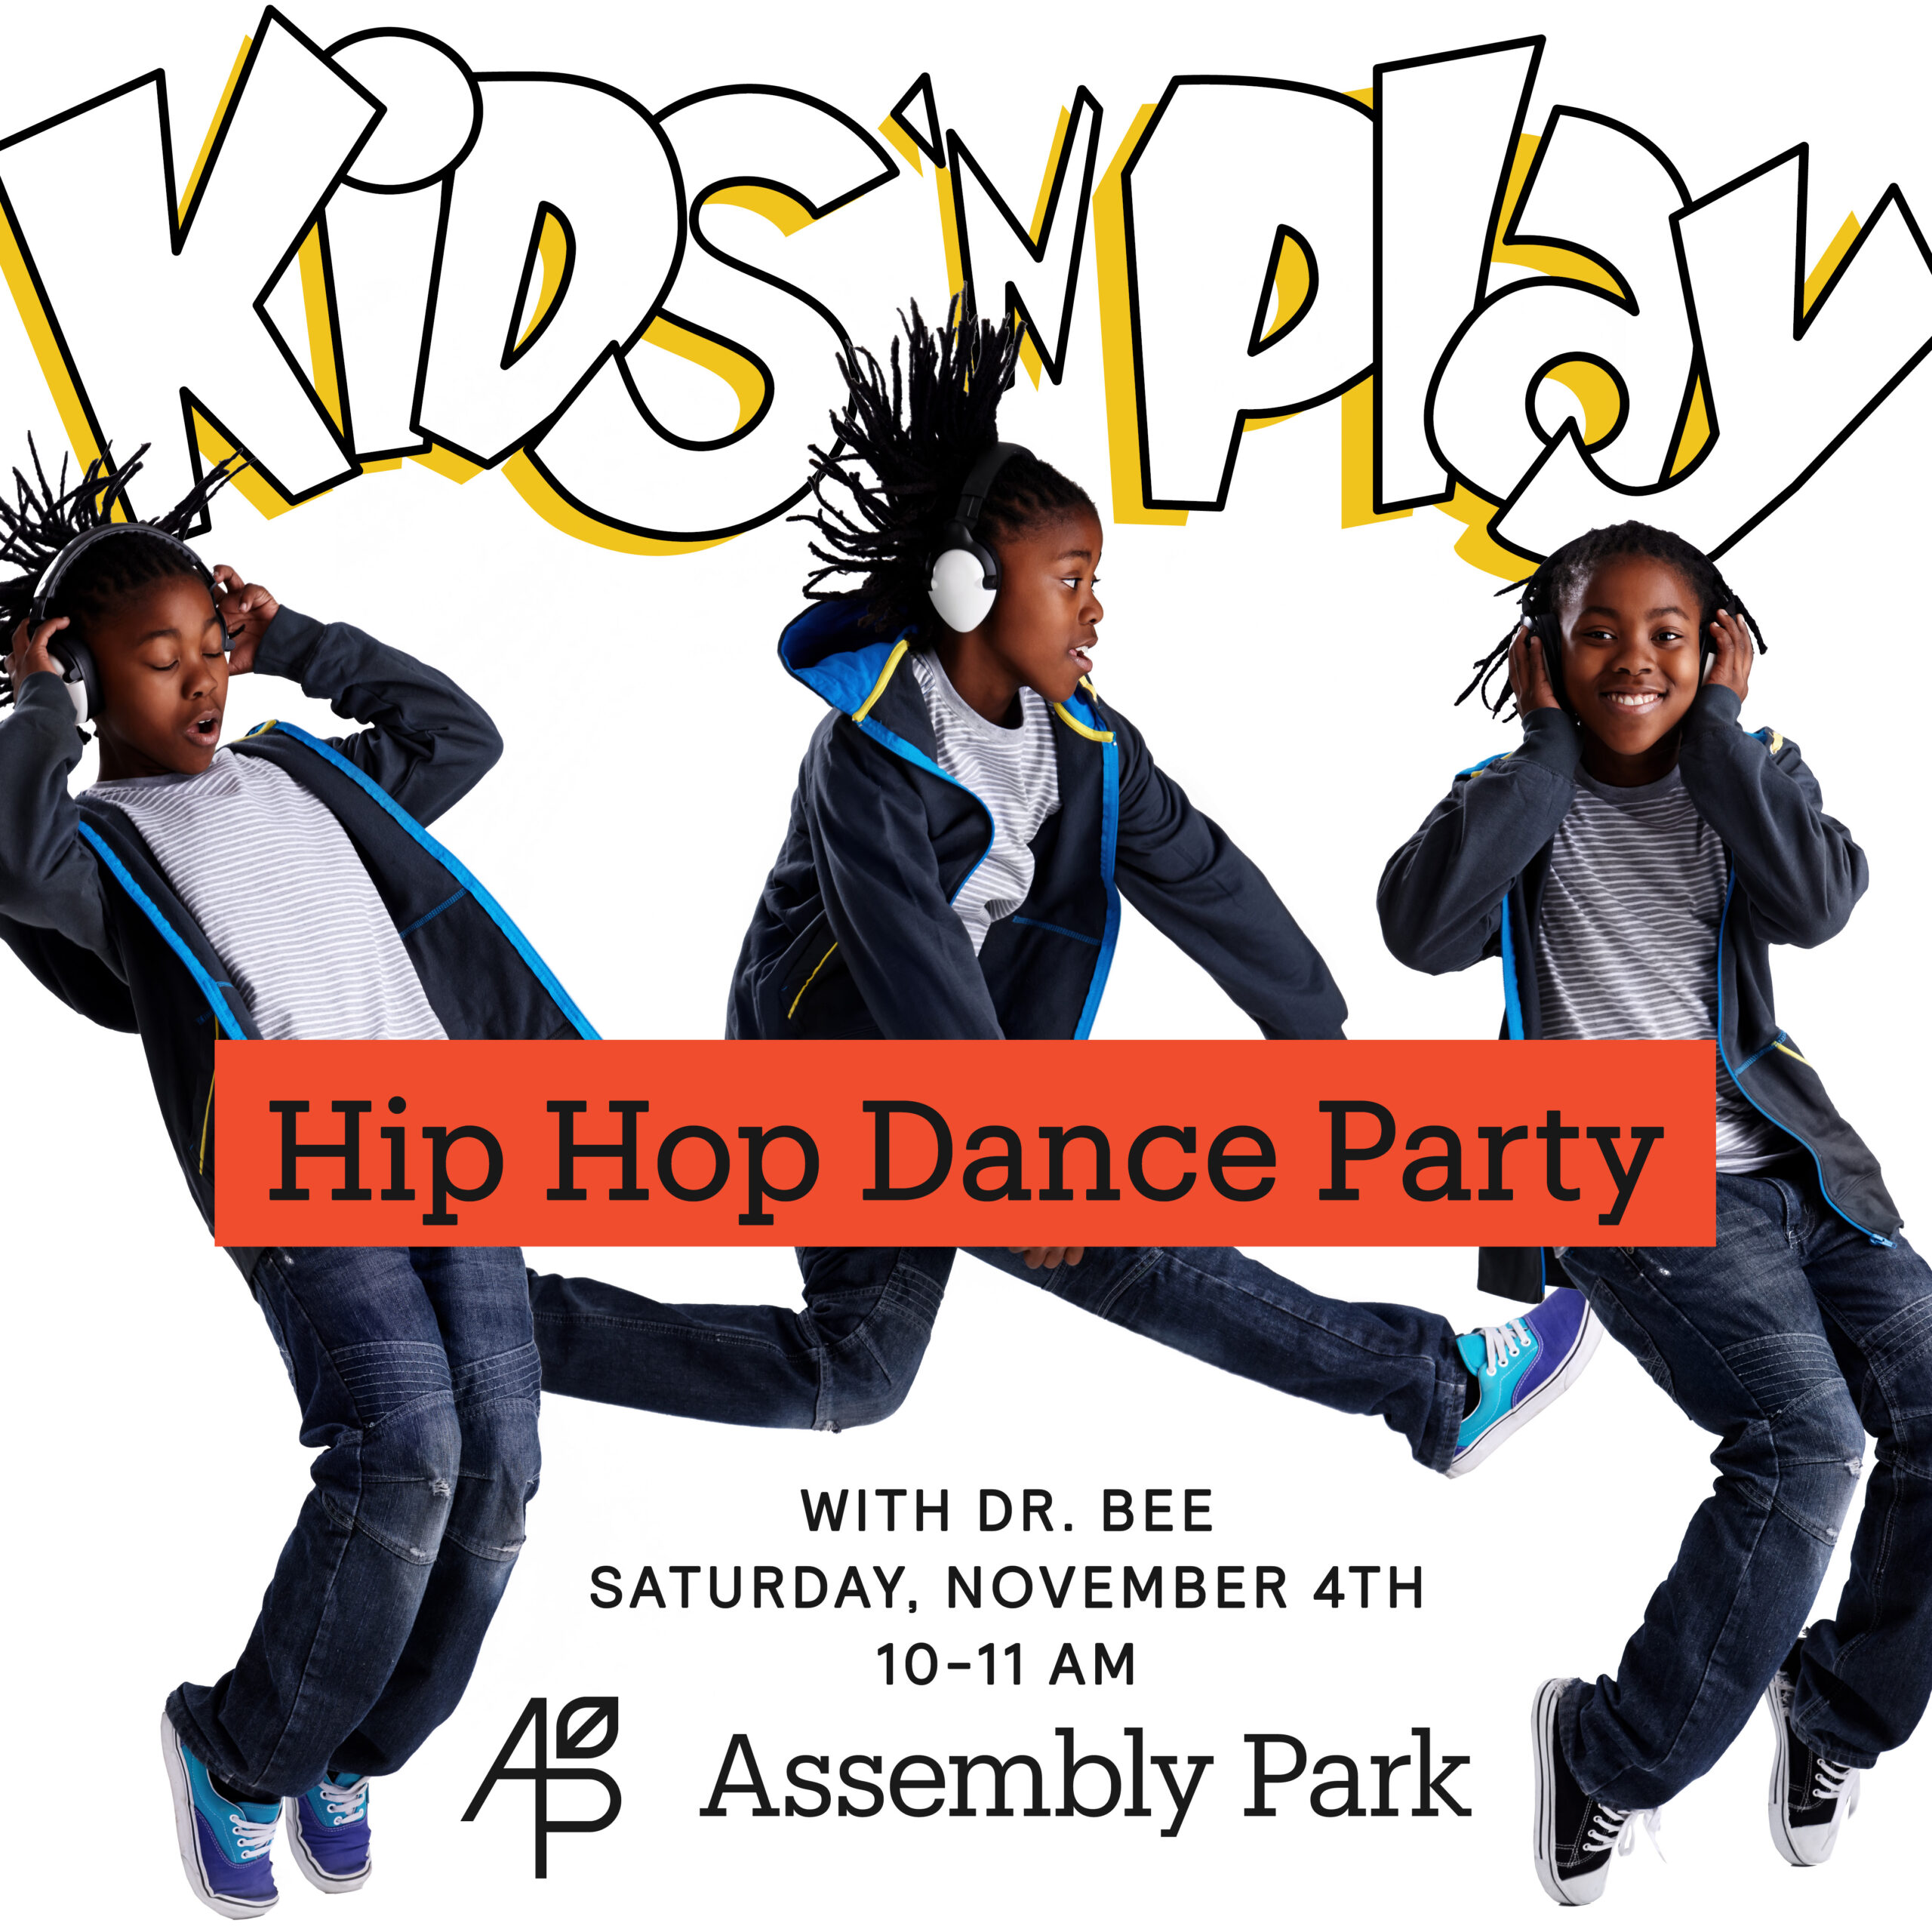 Kids 'N' Play: Hip Hop Dance Party